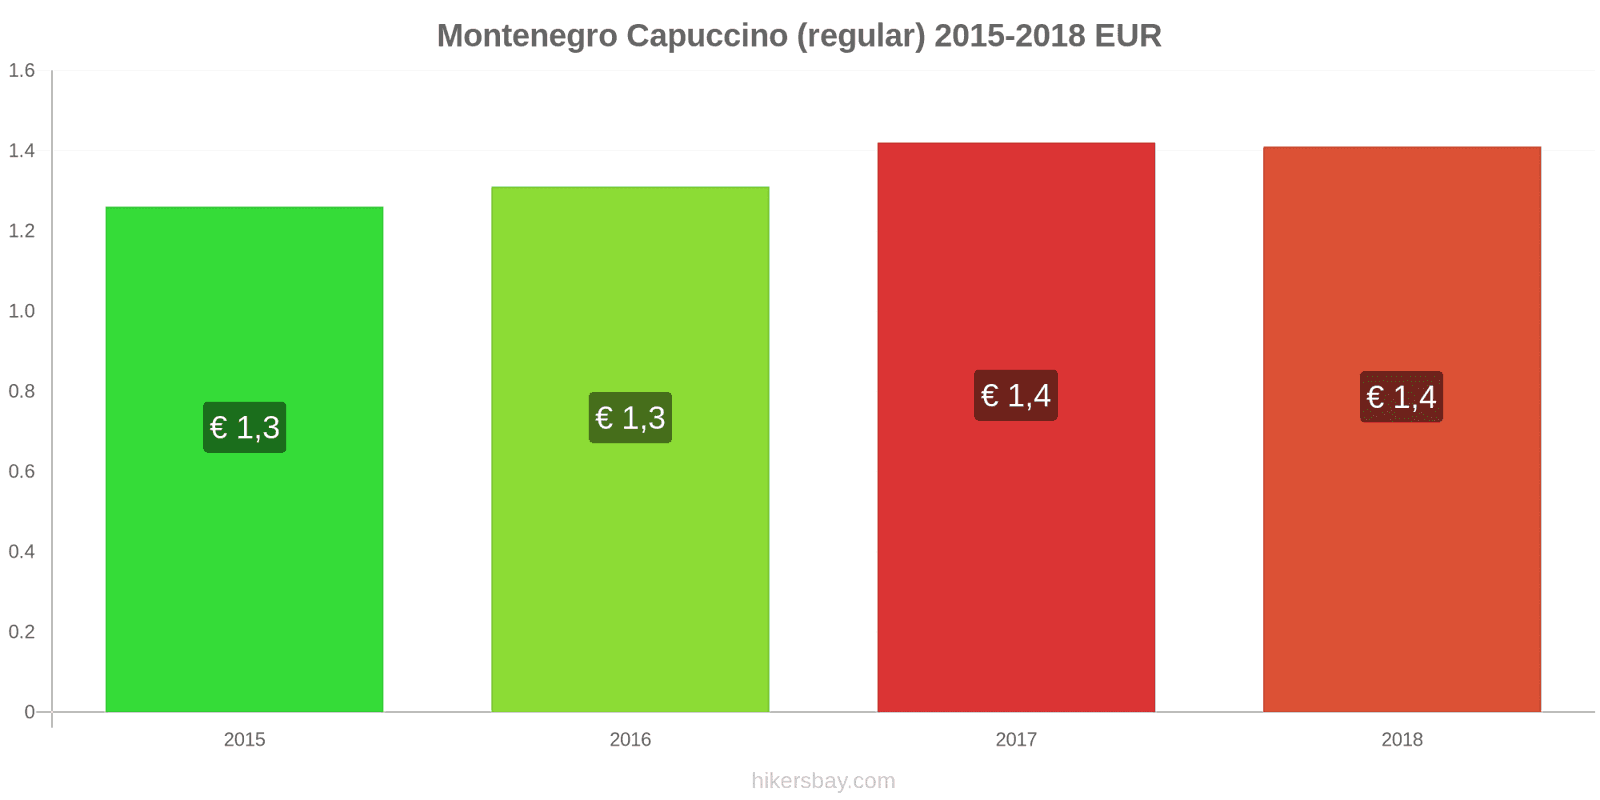 Montenegro mudanças de preços Cappuccino hikersbay.com